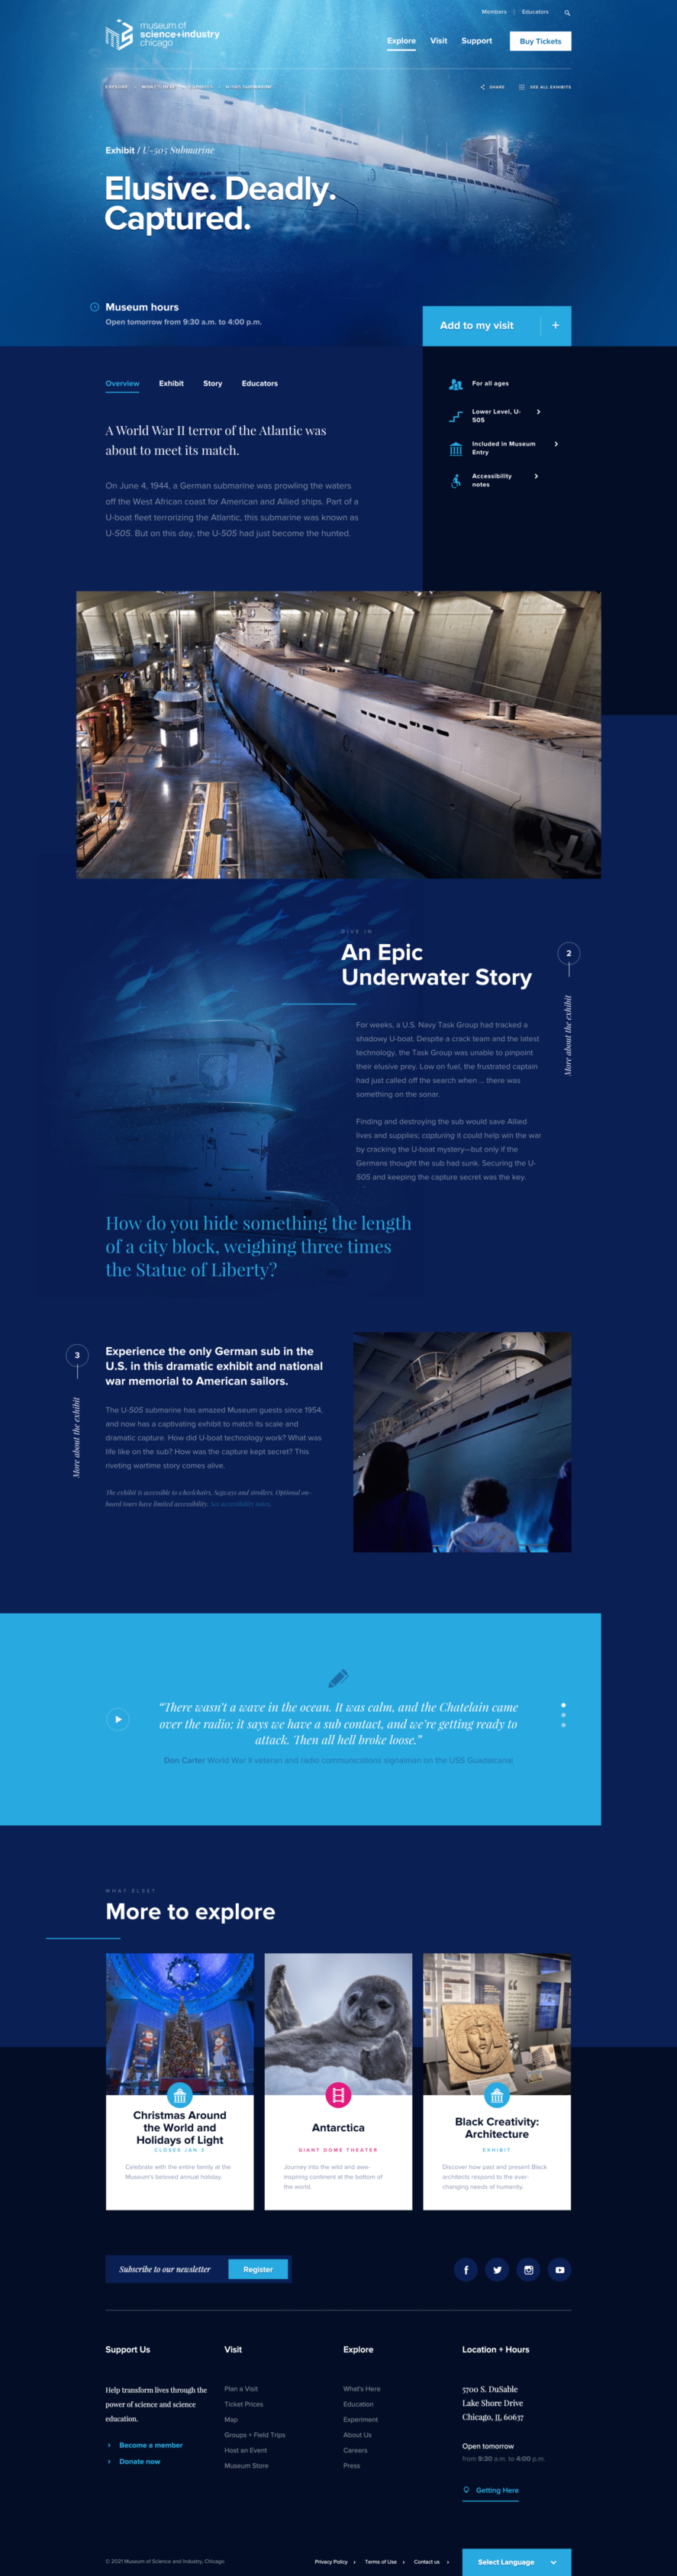 U-505 exhibit page on msichicago.org